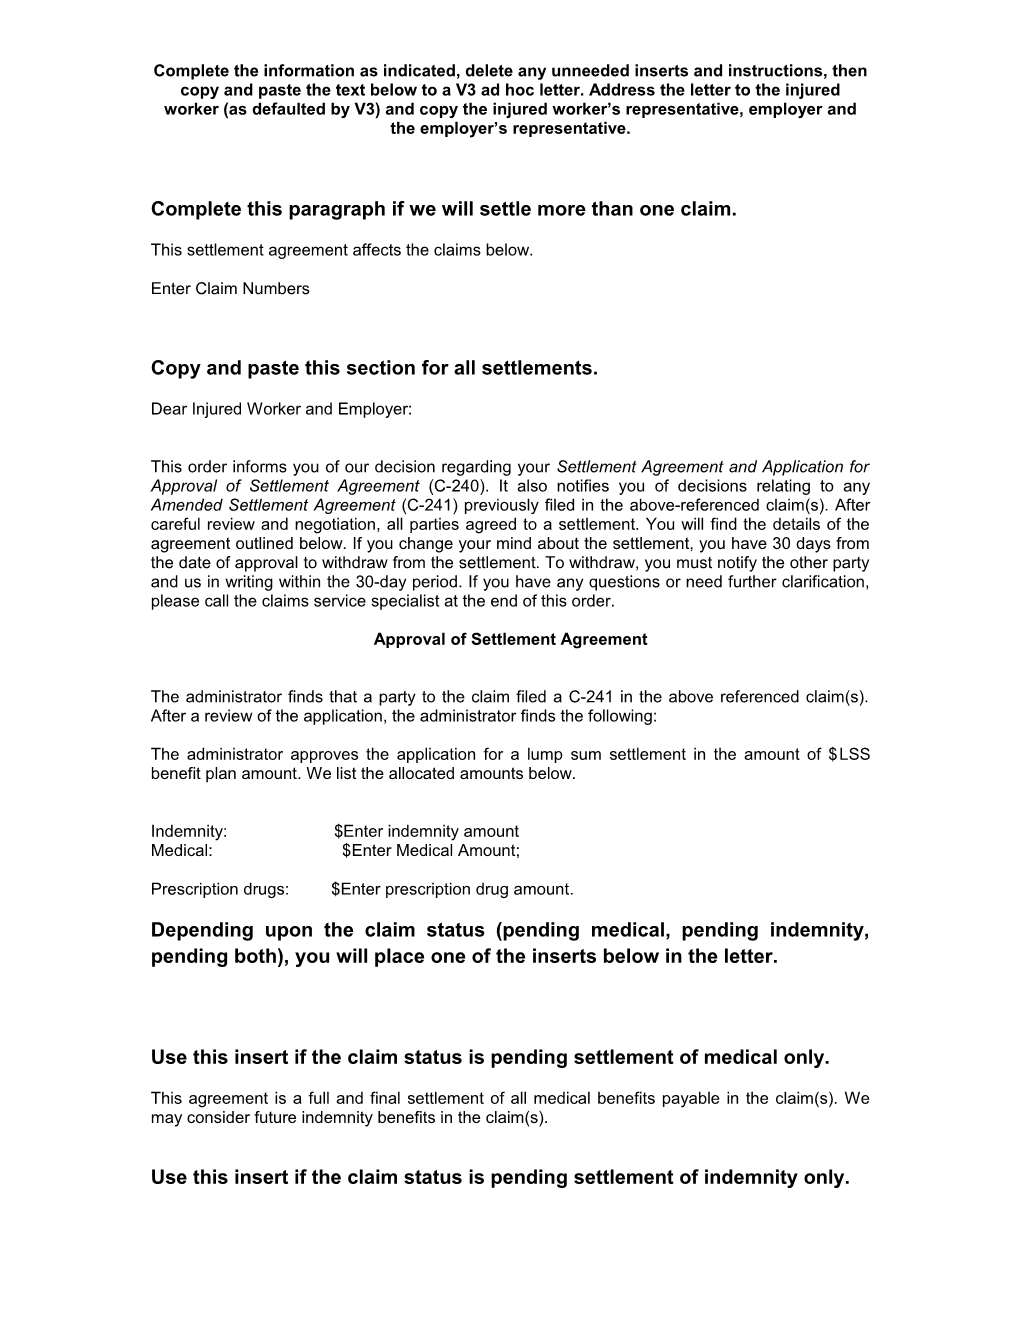 Approval of Settlement Agreement